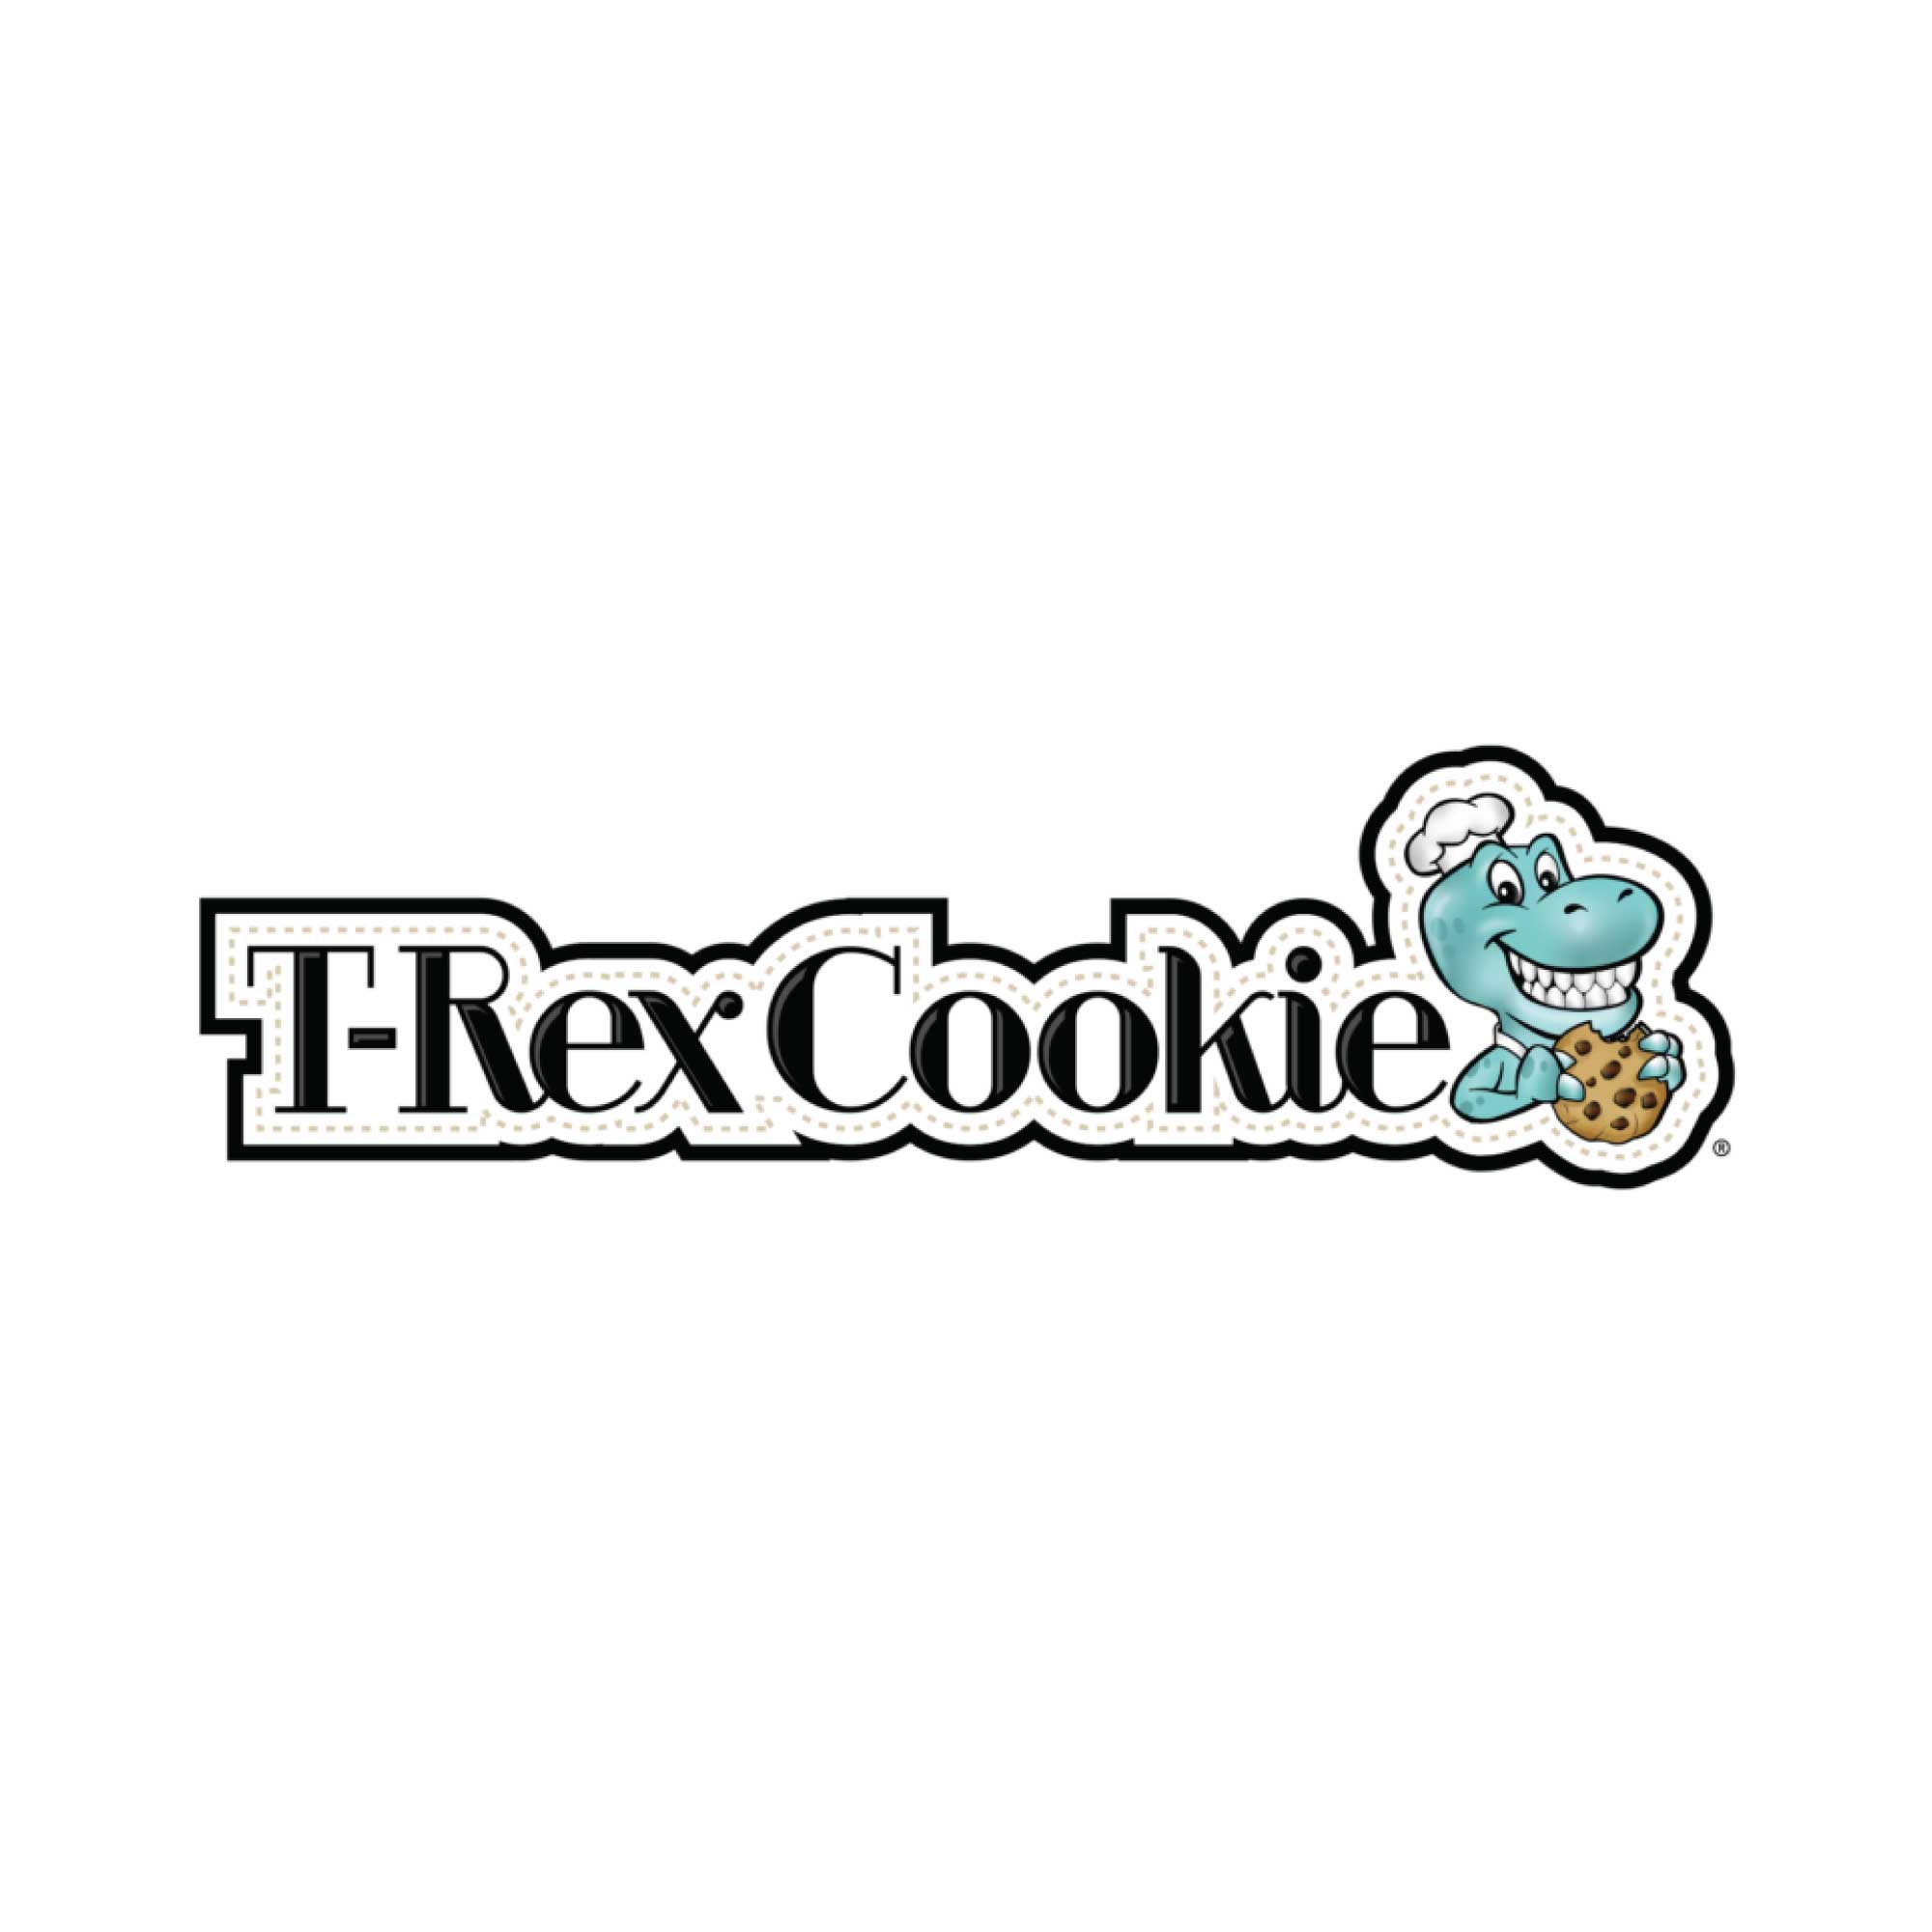 Cookie Company